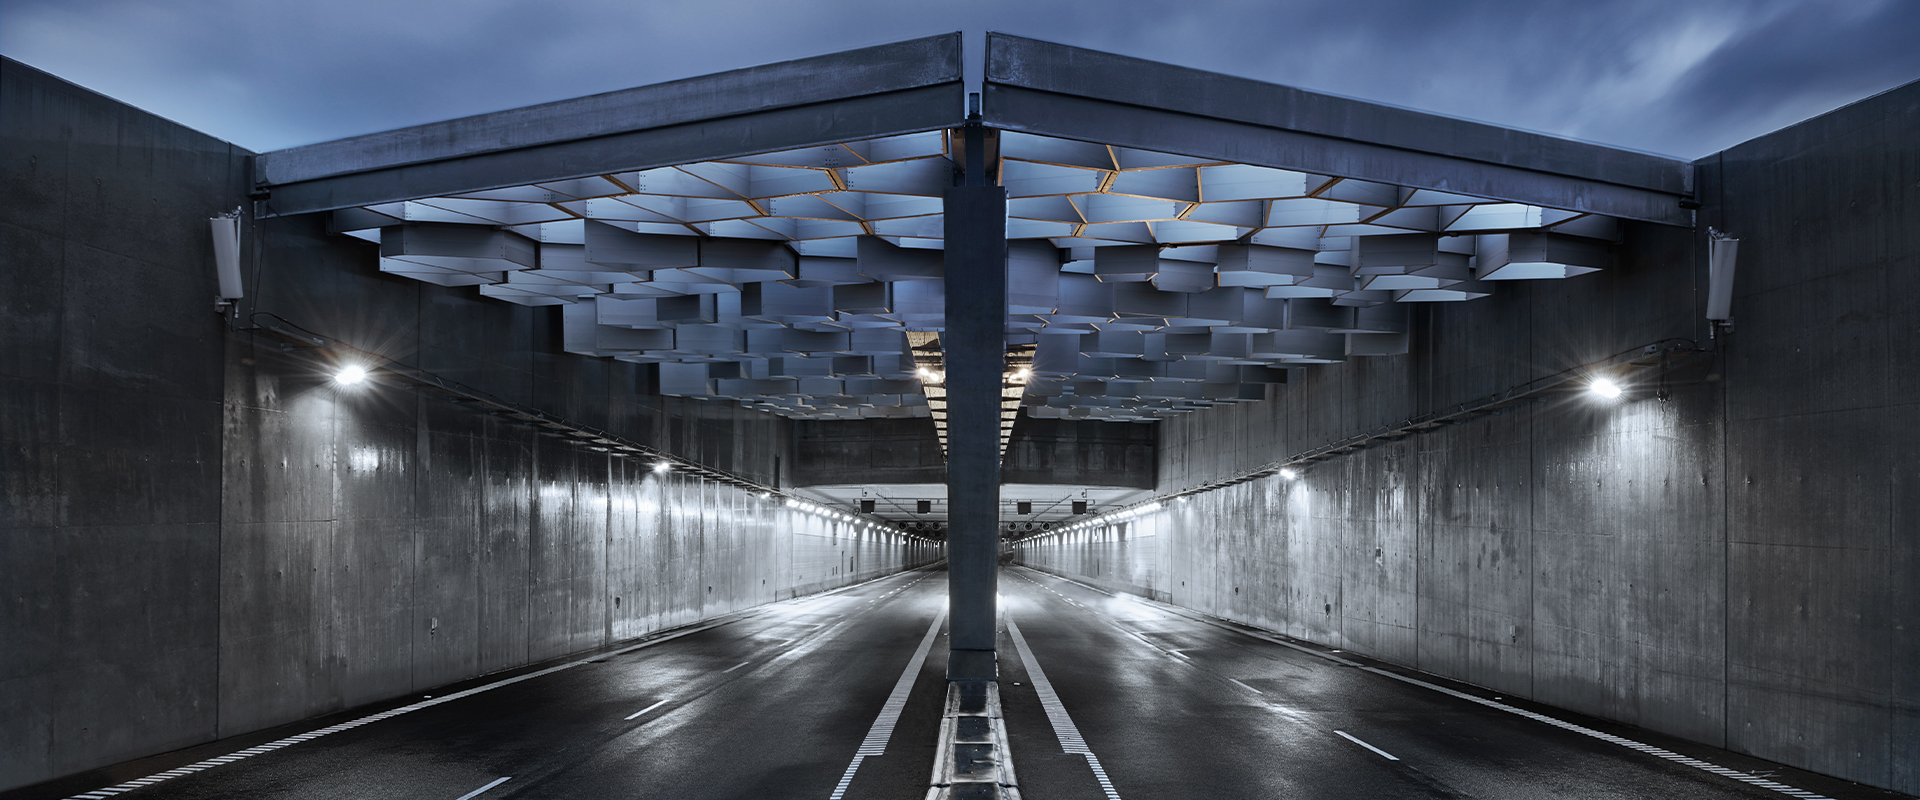 Tunnel lighting control system